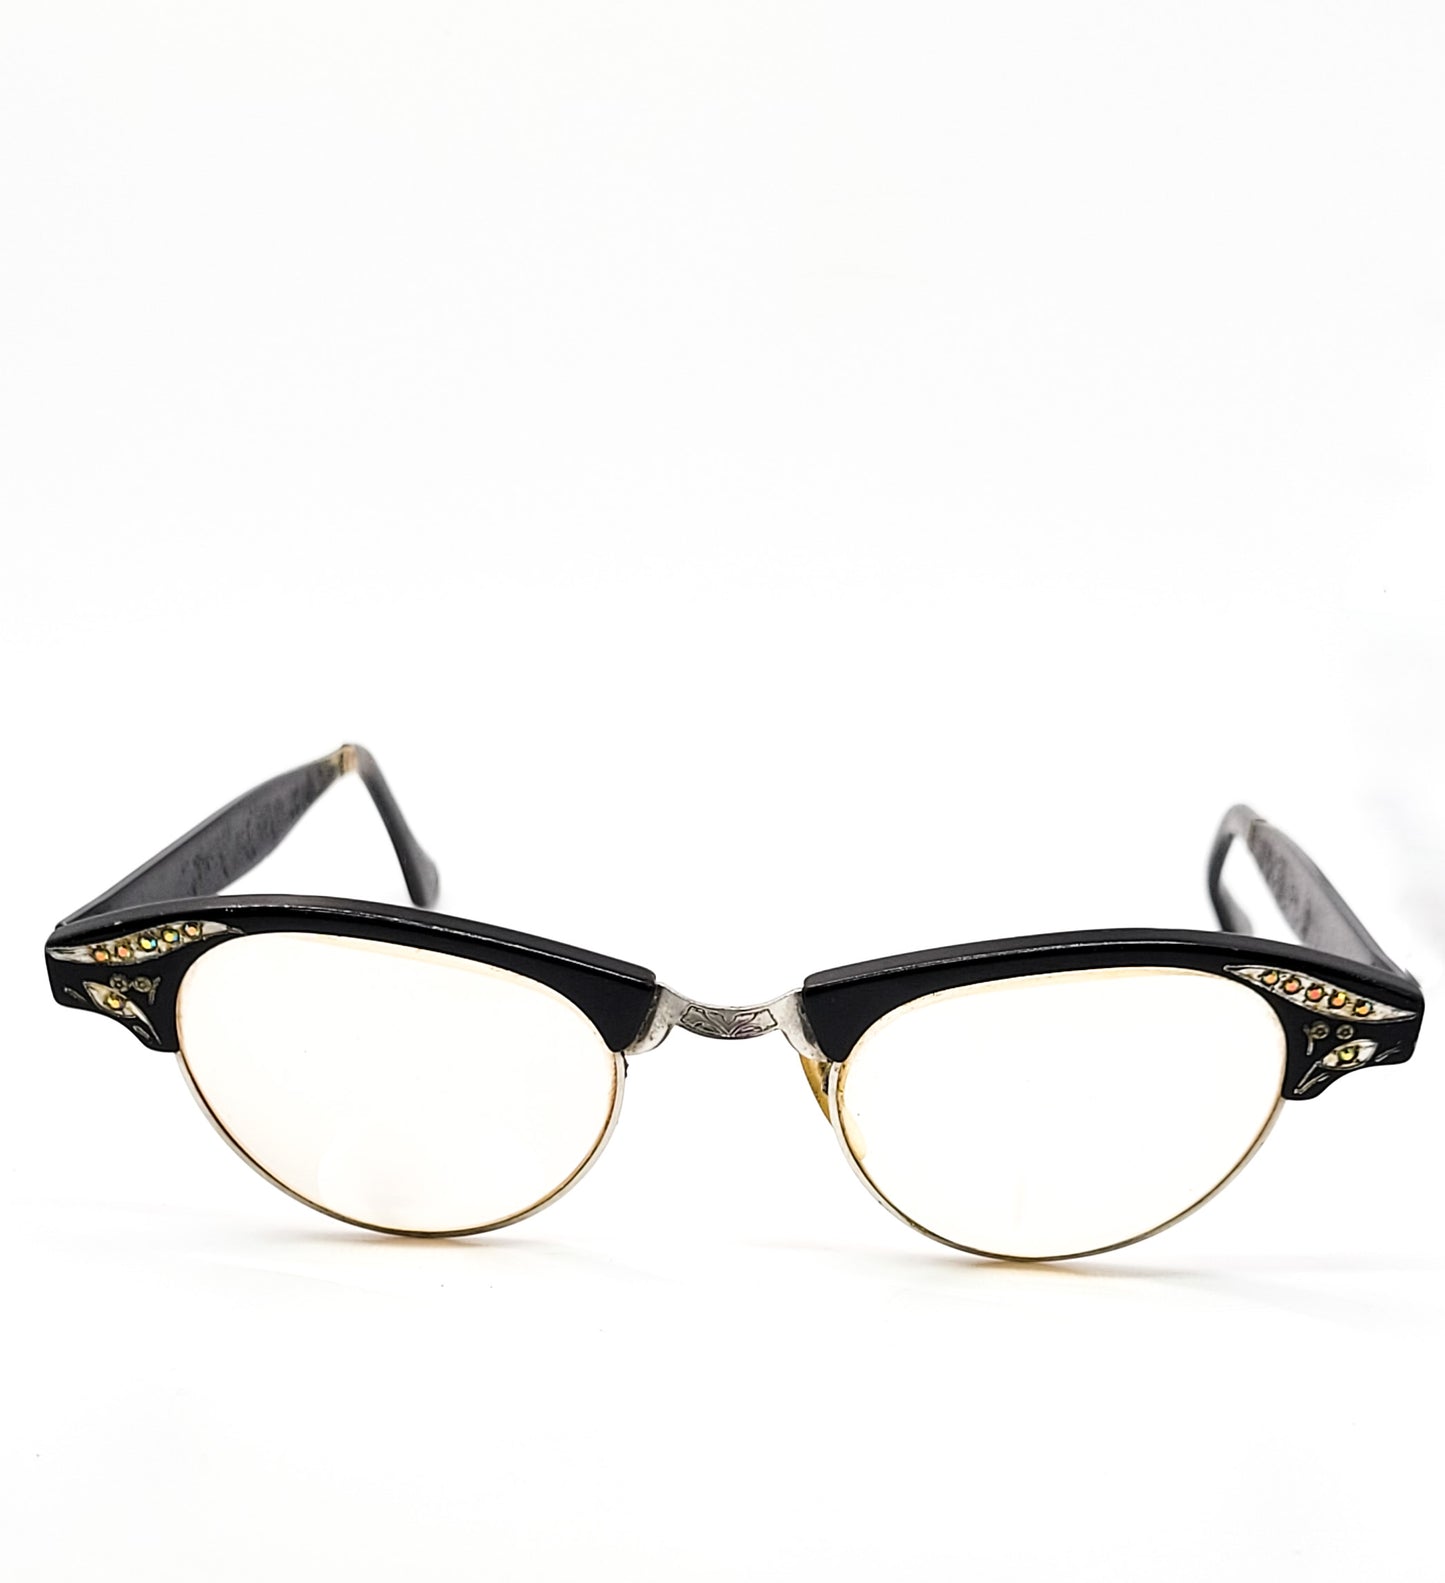 Cat's Eye glasses Retro pin up vintage rhinestone enamel black and white eyeglasses